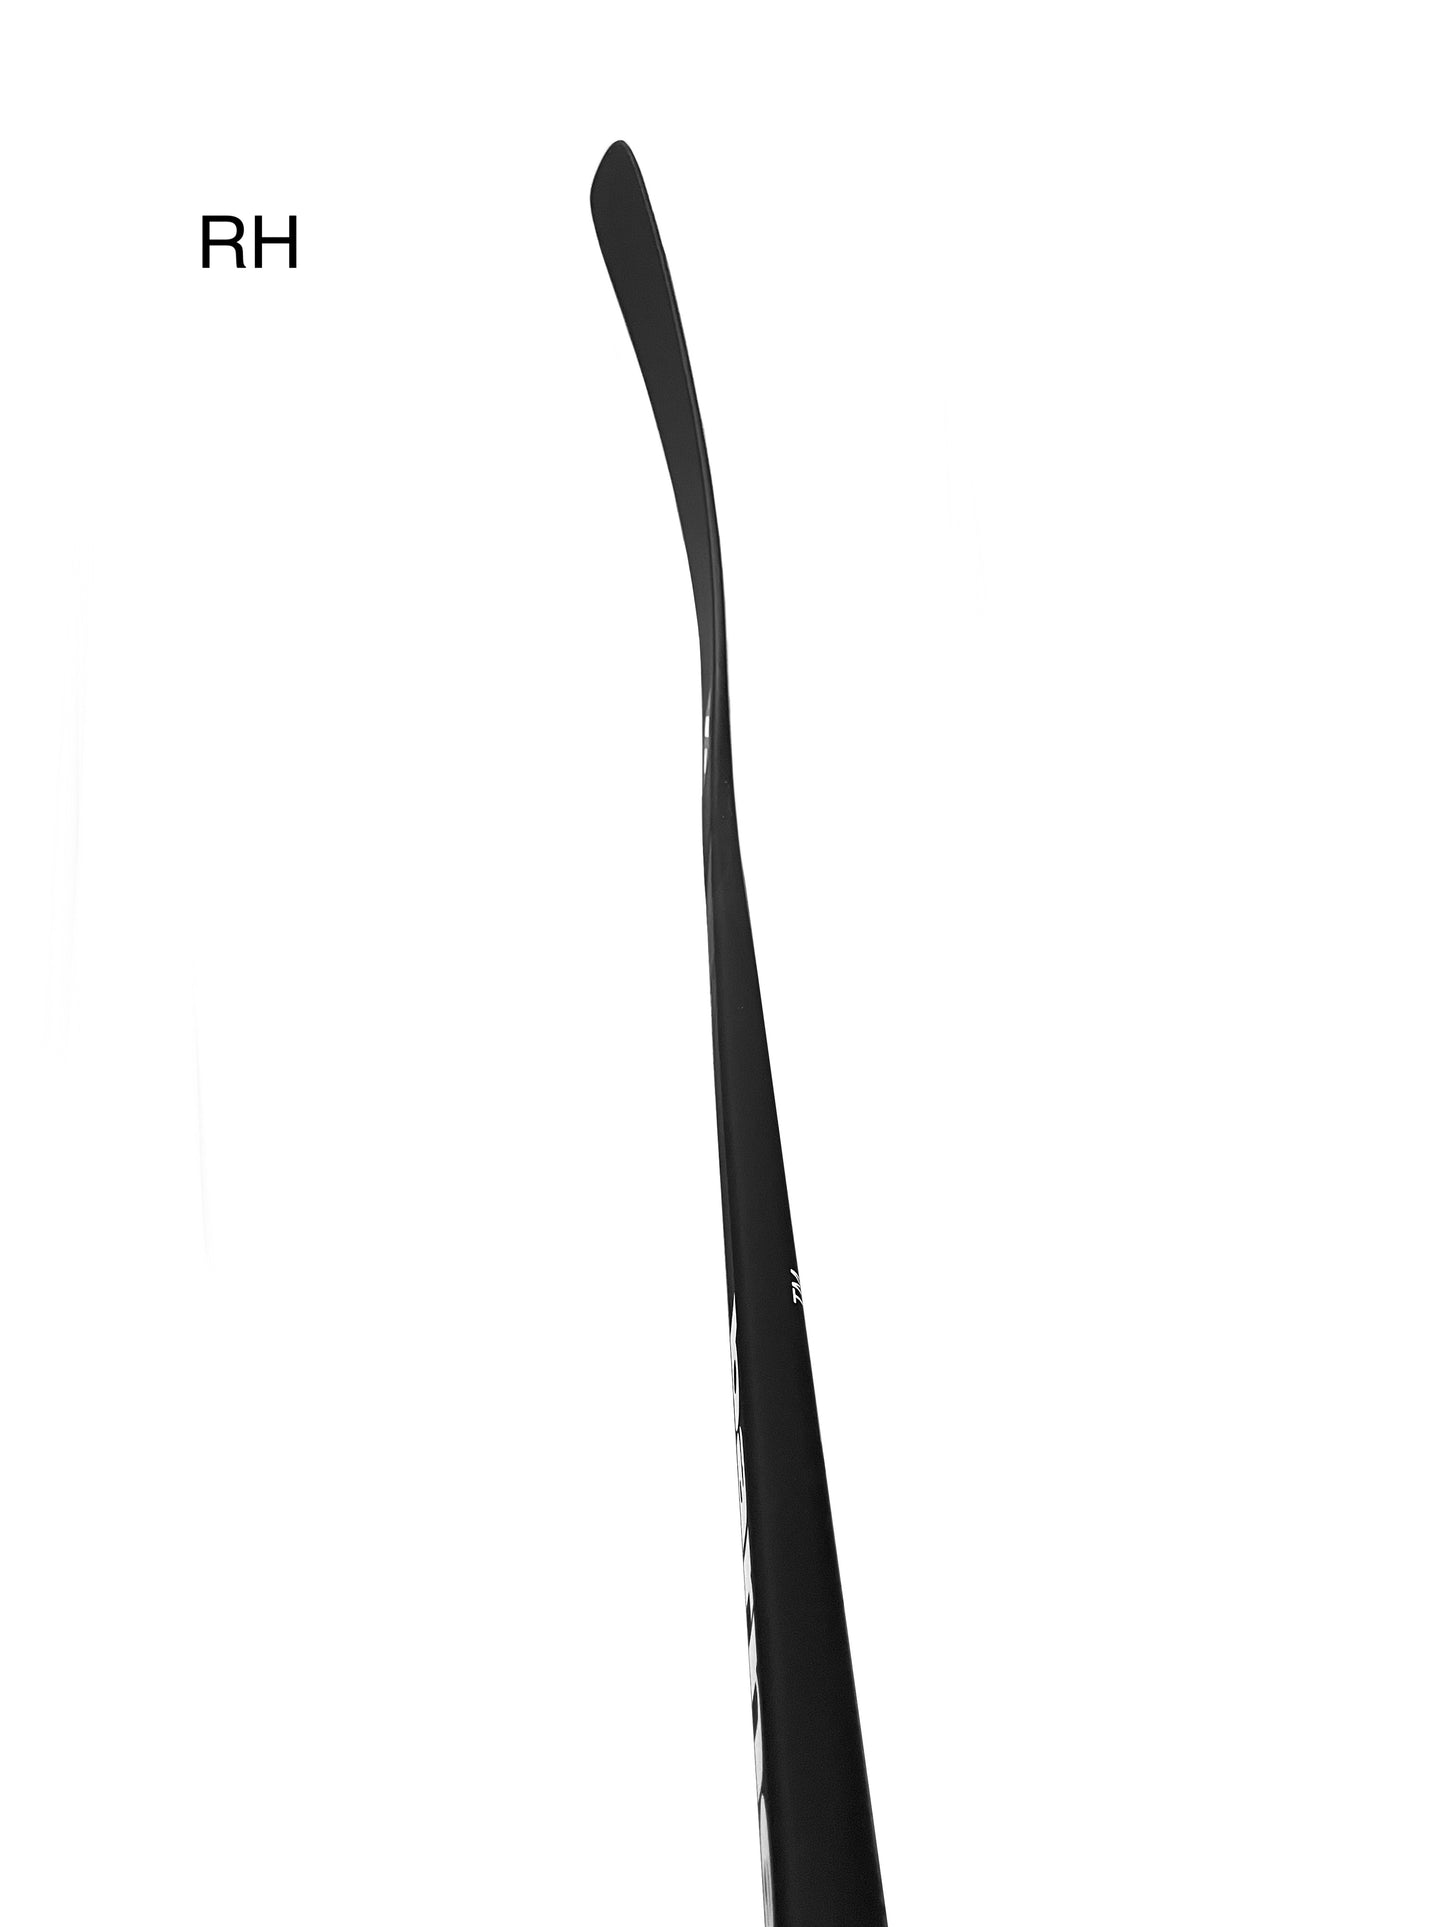 HS-7 High Modulus Carbon Hockey Stick